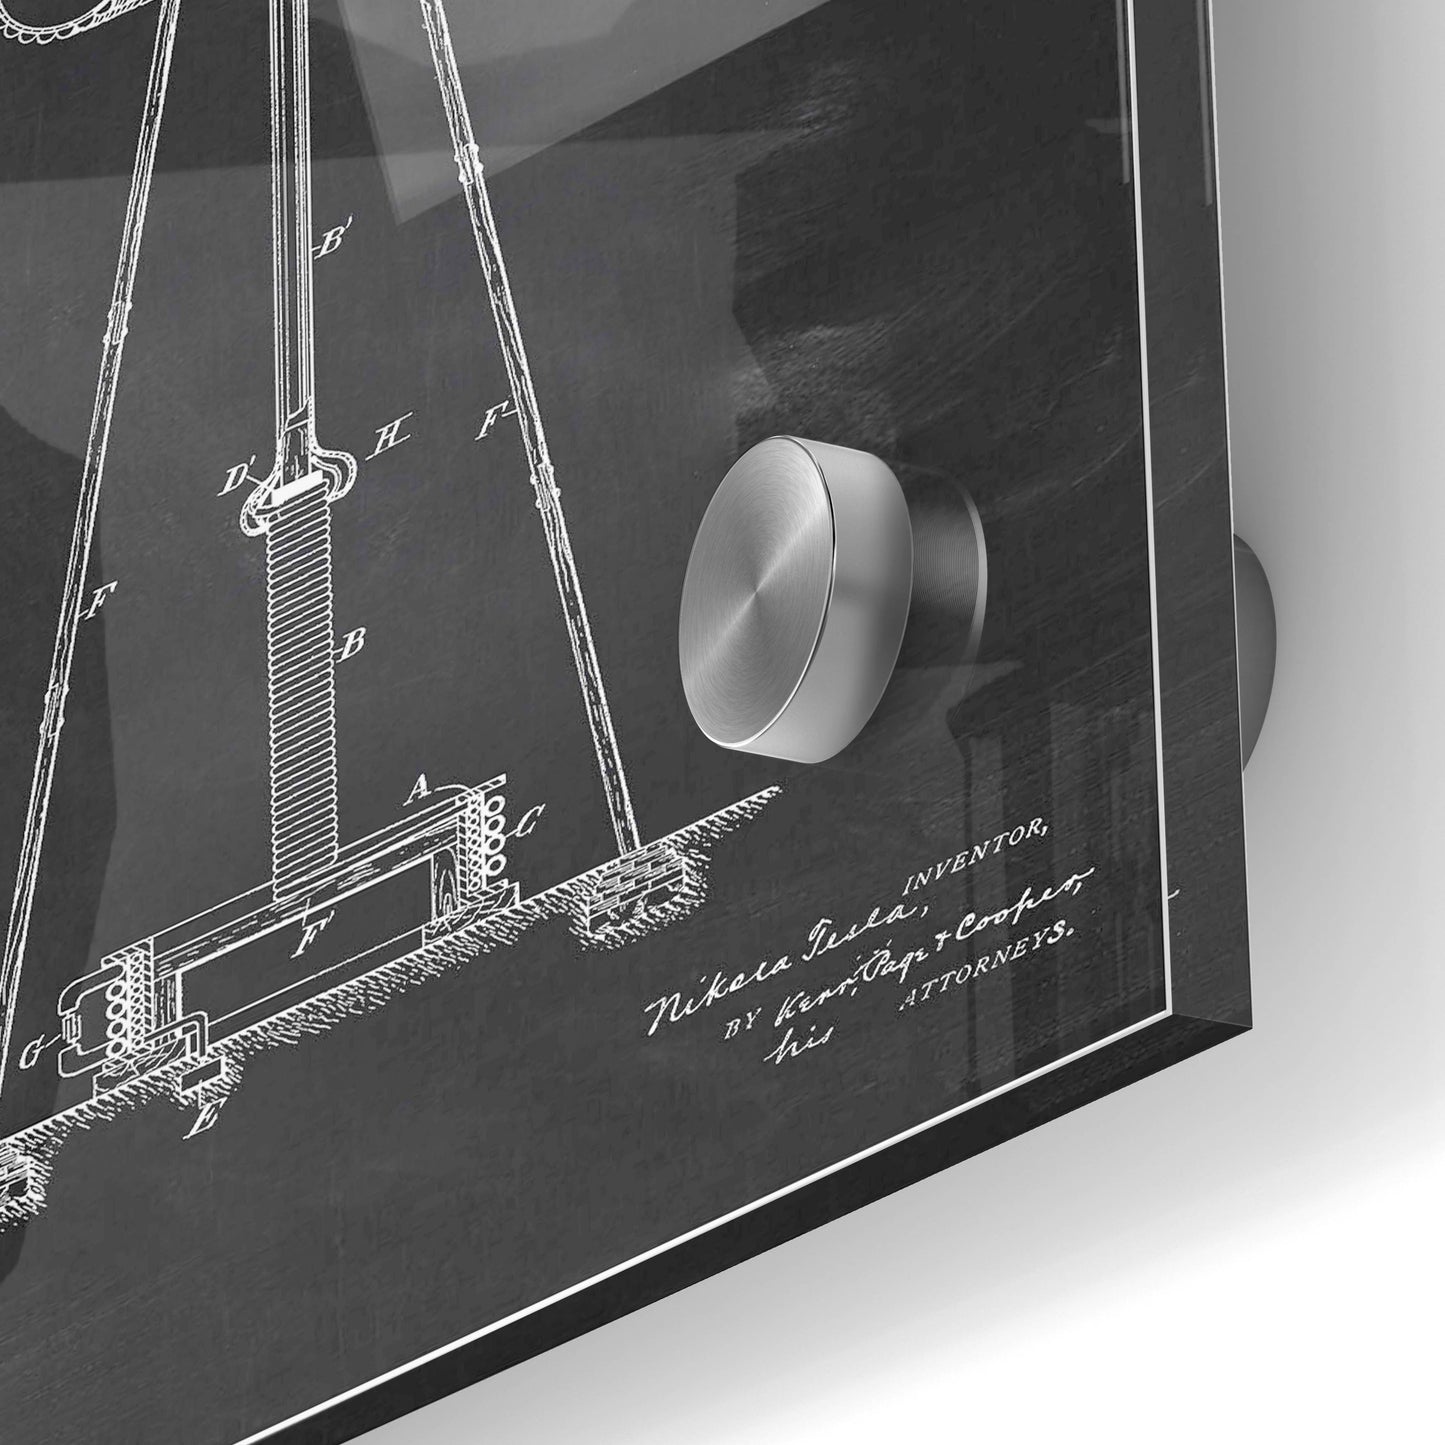 Epic Art 'Tesla Apparatus for Transmitting Electrical Energy Blueprint Patent Chalkboard' Acrylic Glass Wall Art,24x36